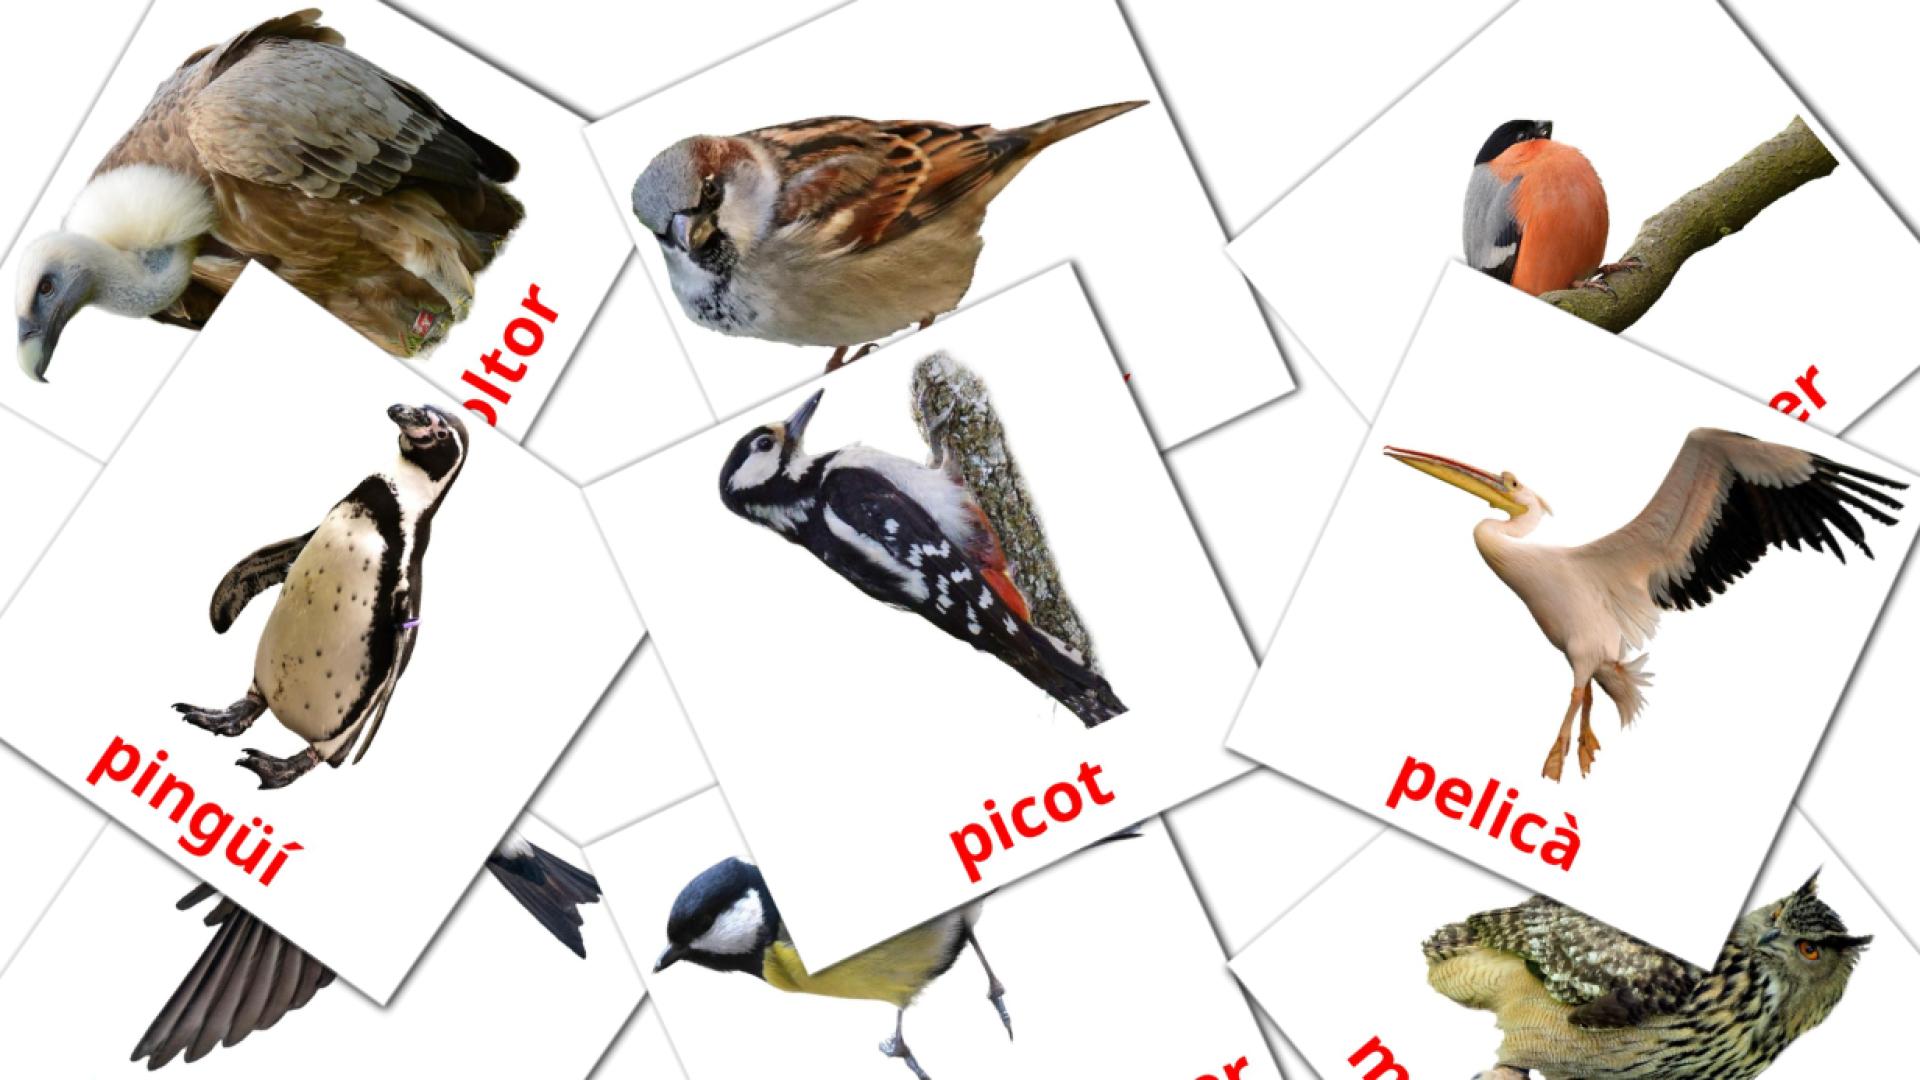 Ocells catalan vocabulary flashcards